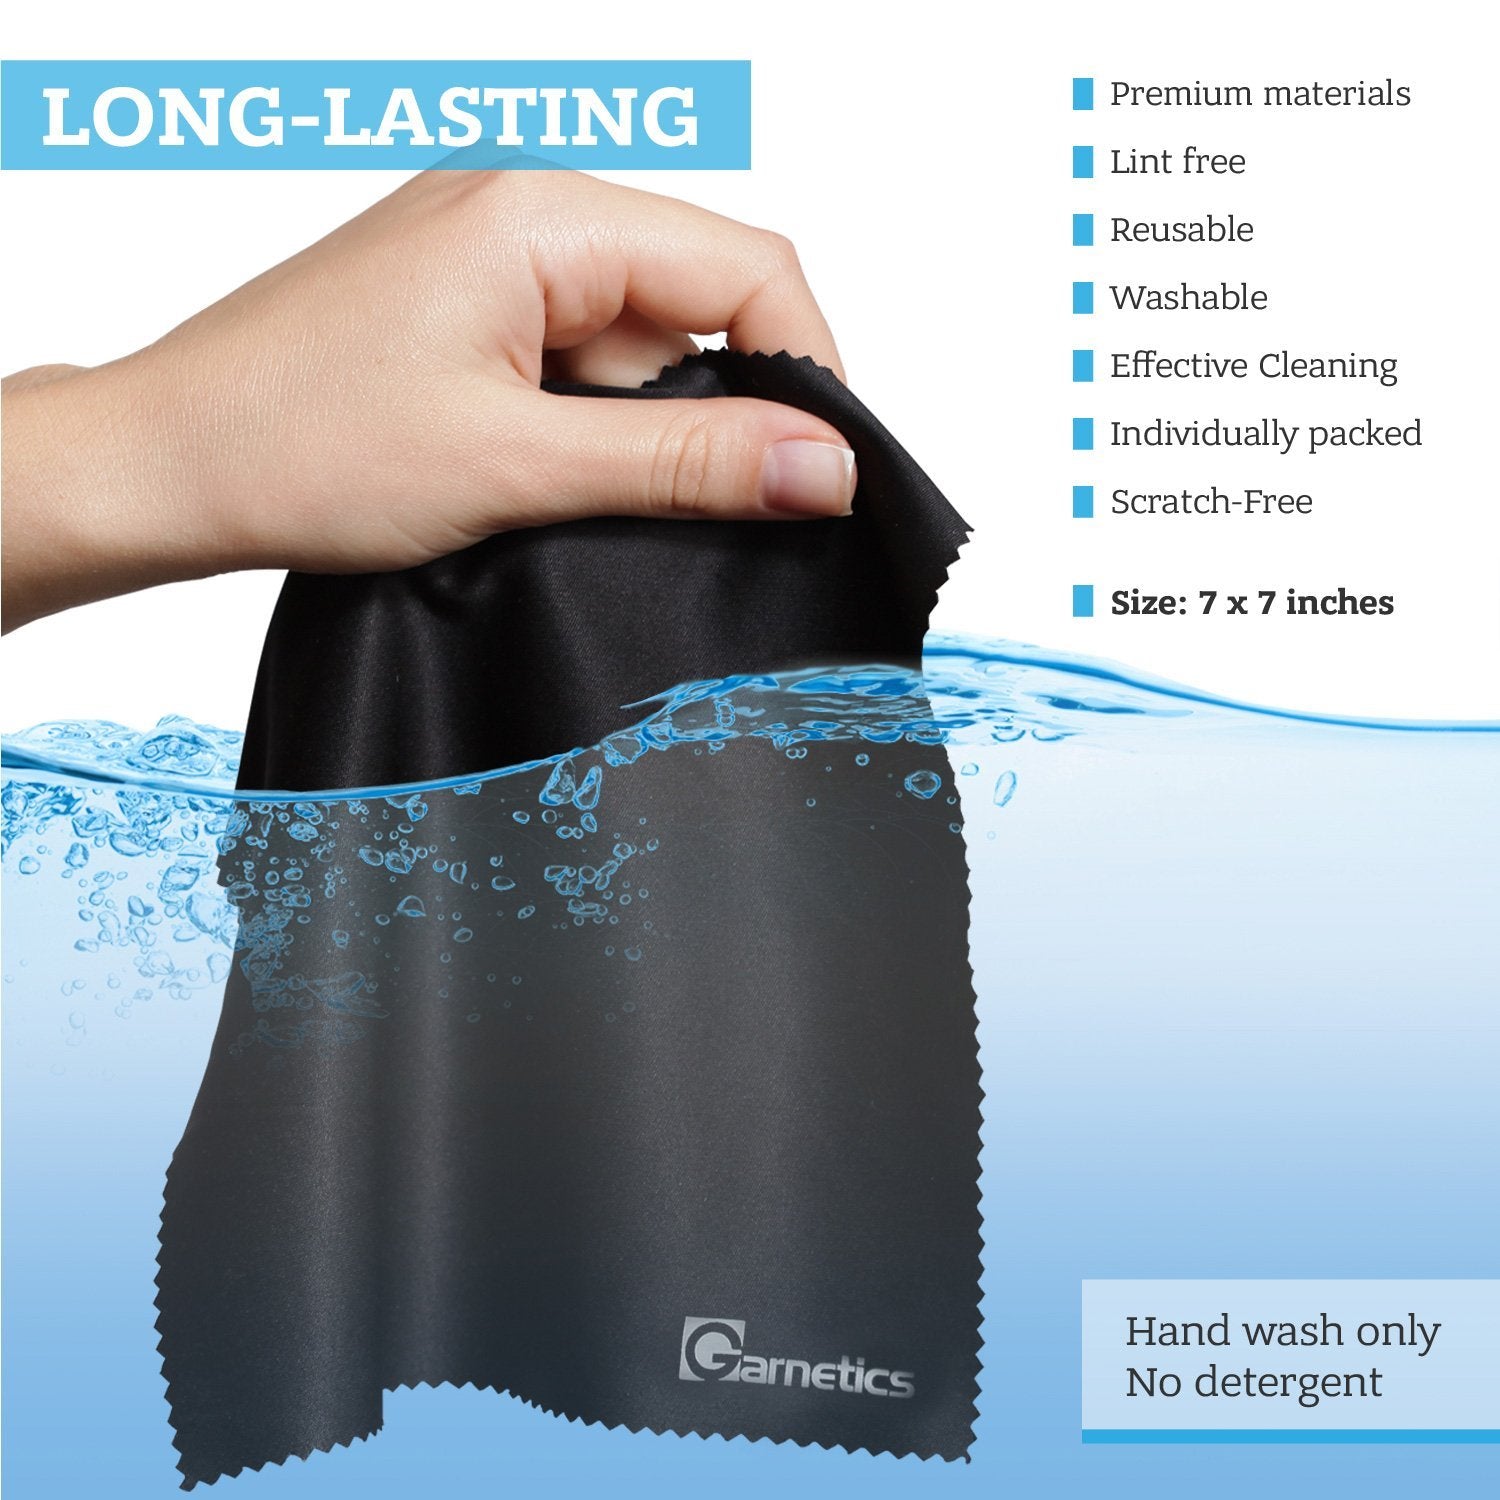 12 Pack: Premium Lintfree Microfiber Cleaning Cloths